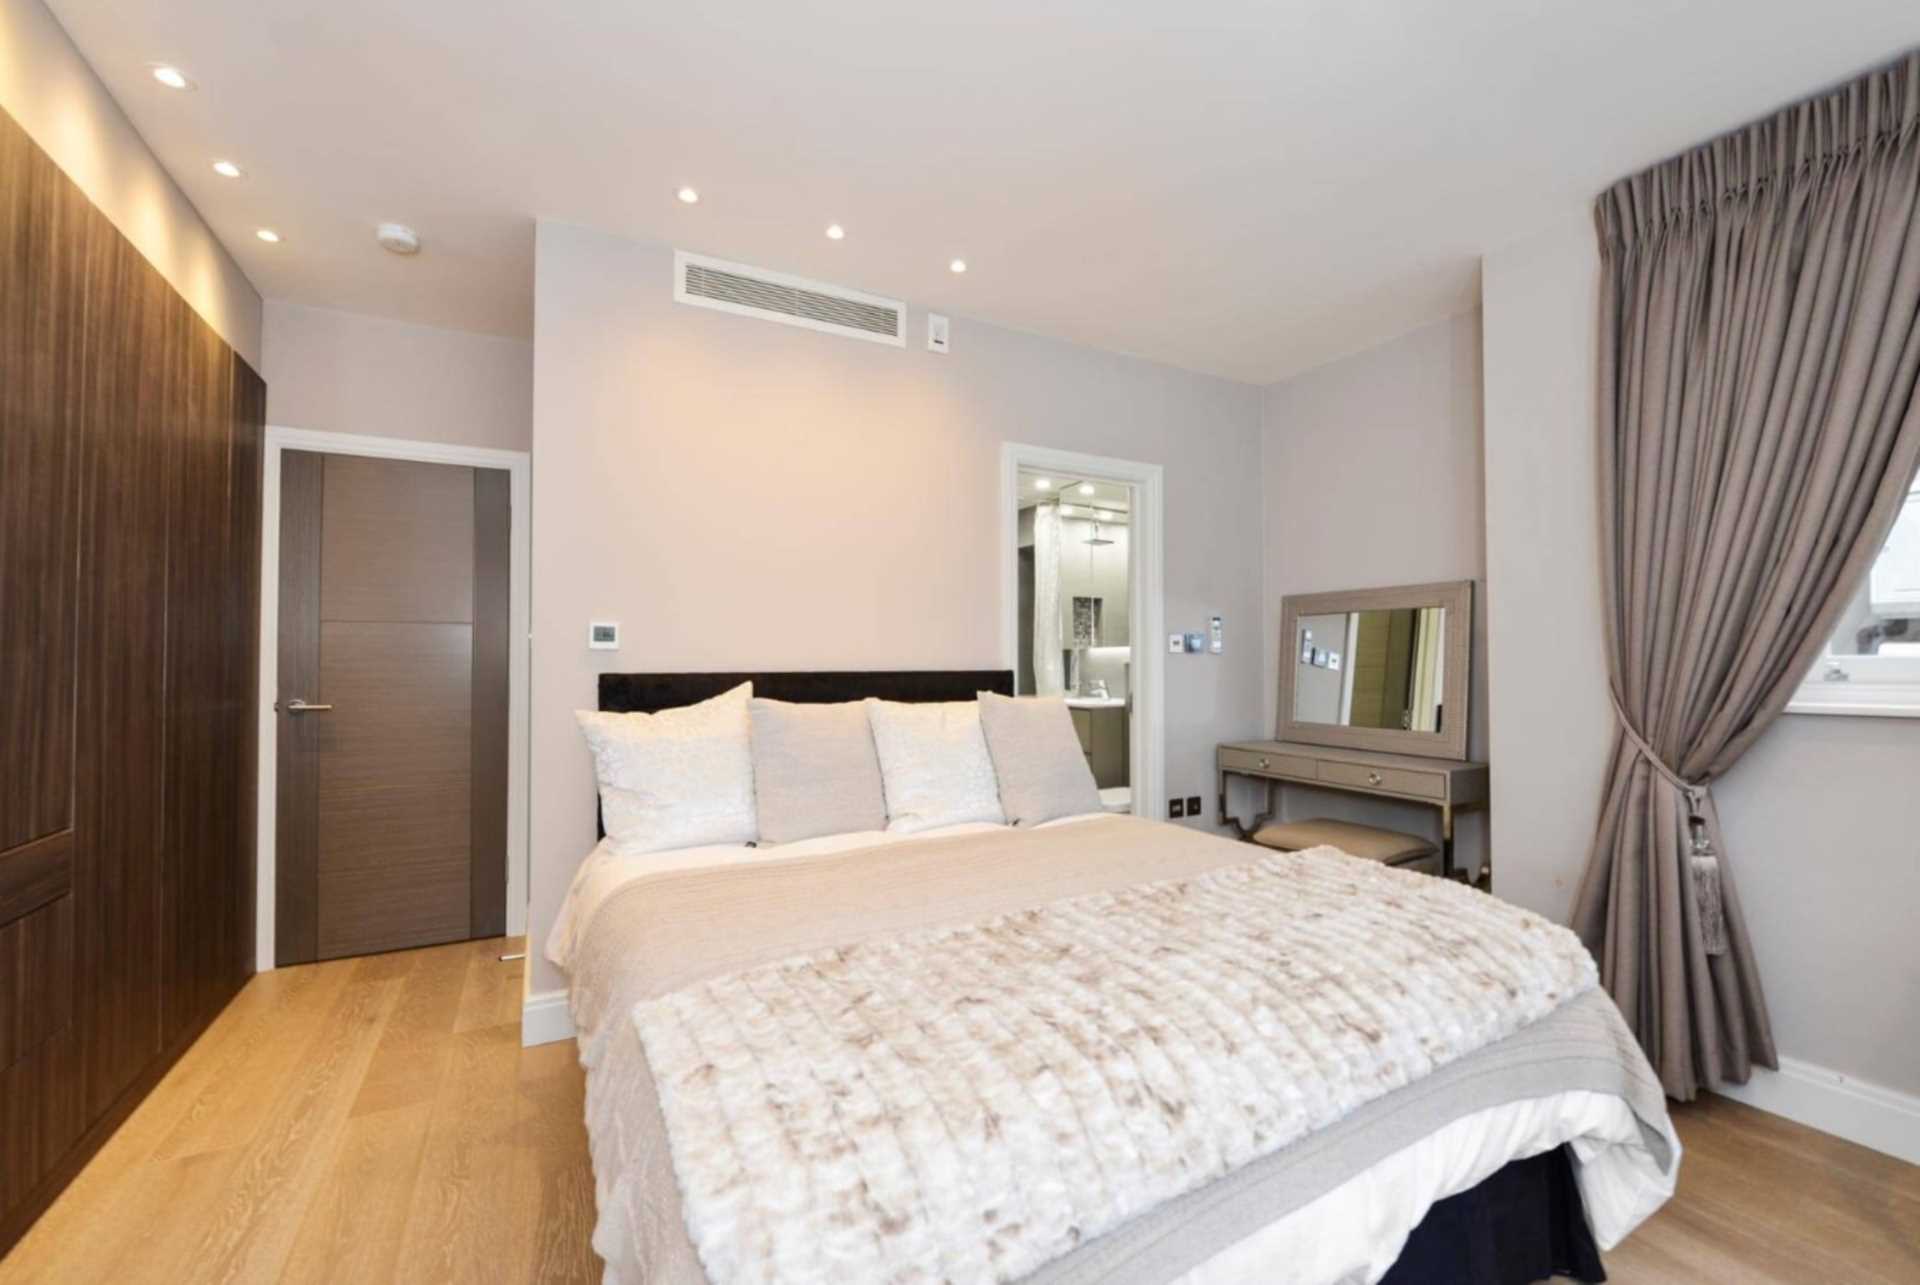 London NW3 5PB 2 bed flat rental property internal/external image-3